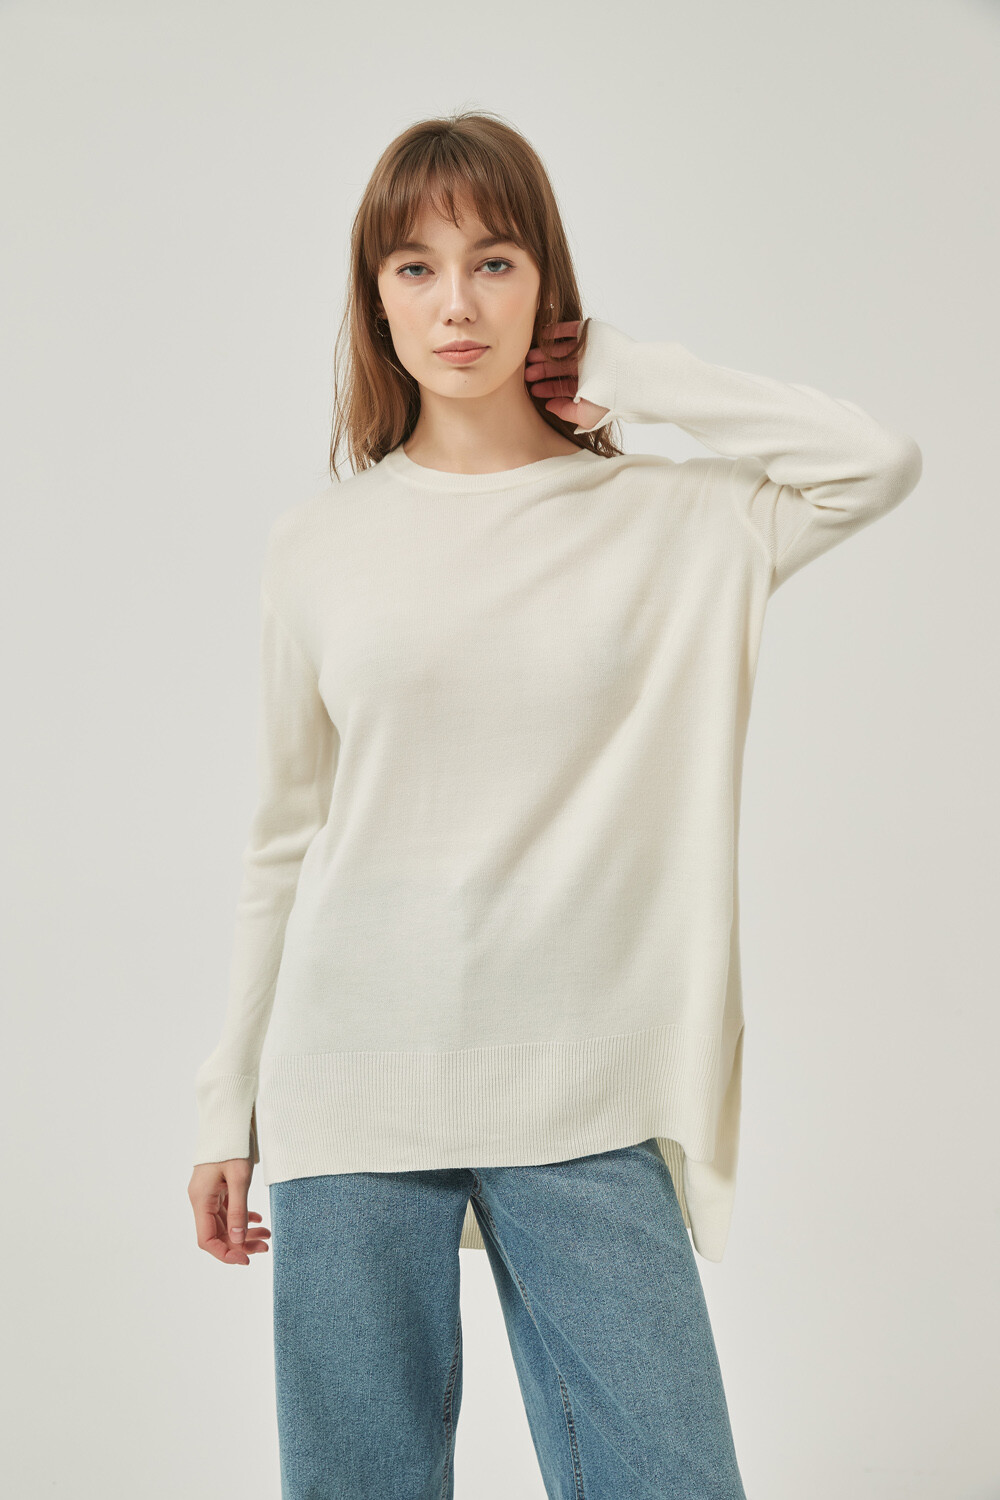 Sweater Baidai Crudo / Natural